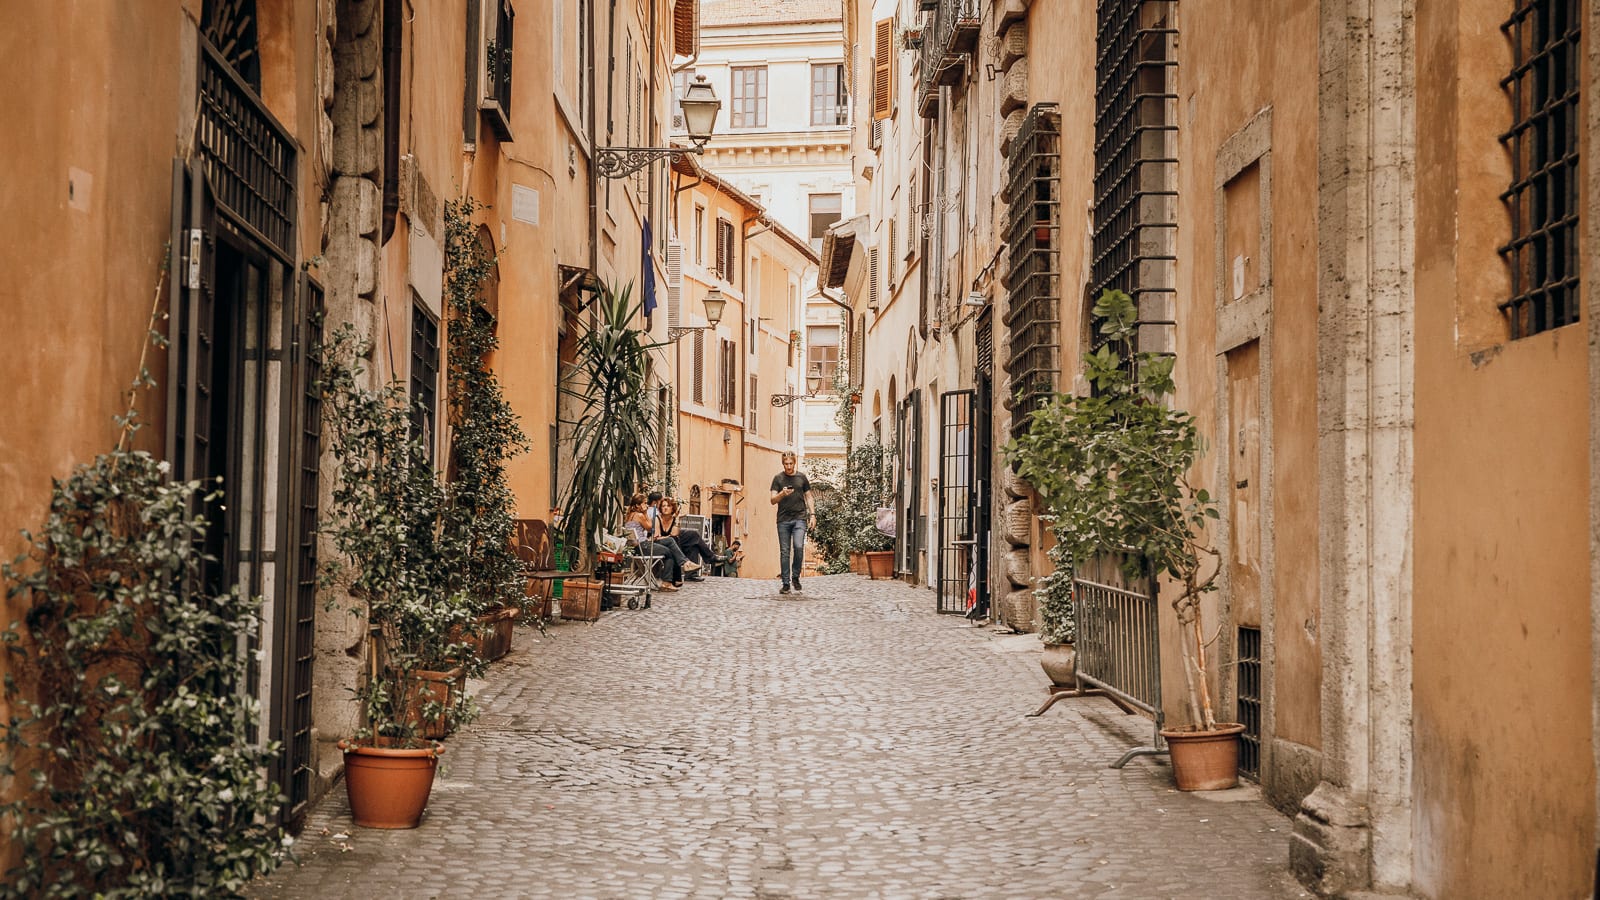 A man walking through a quiet street in Rome's Trastevere neighborhood.